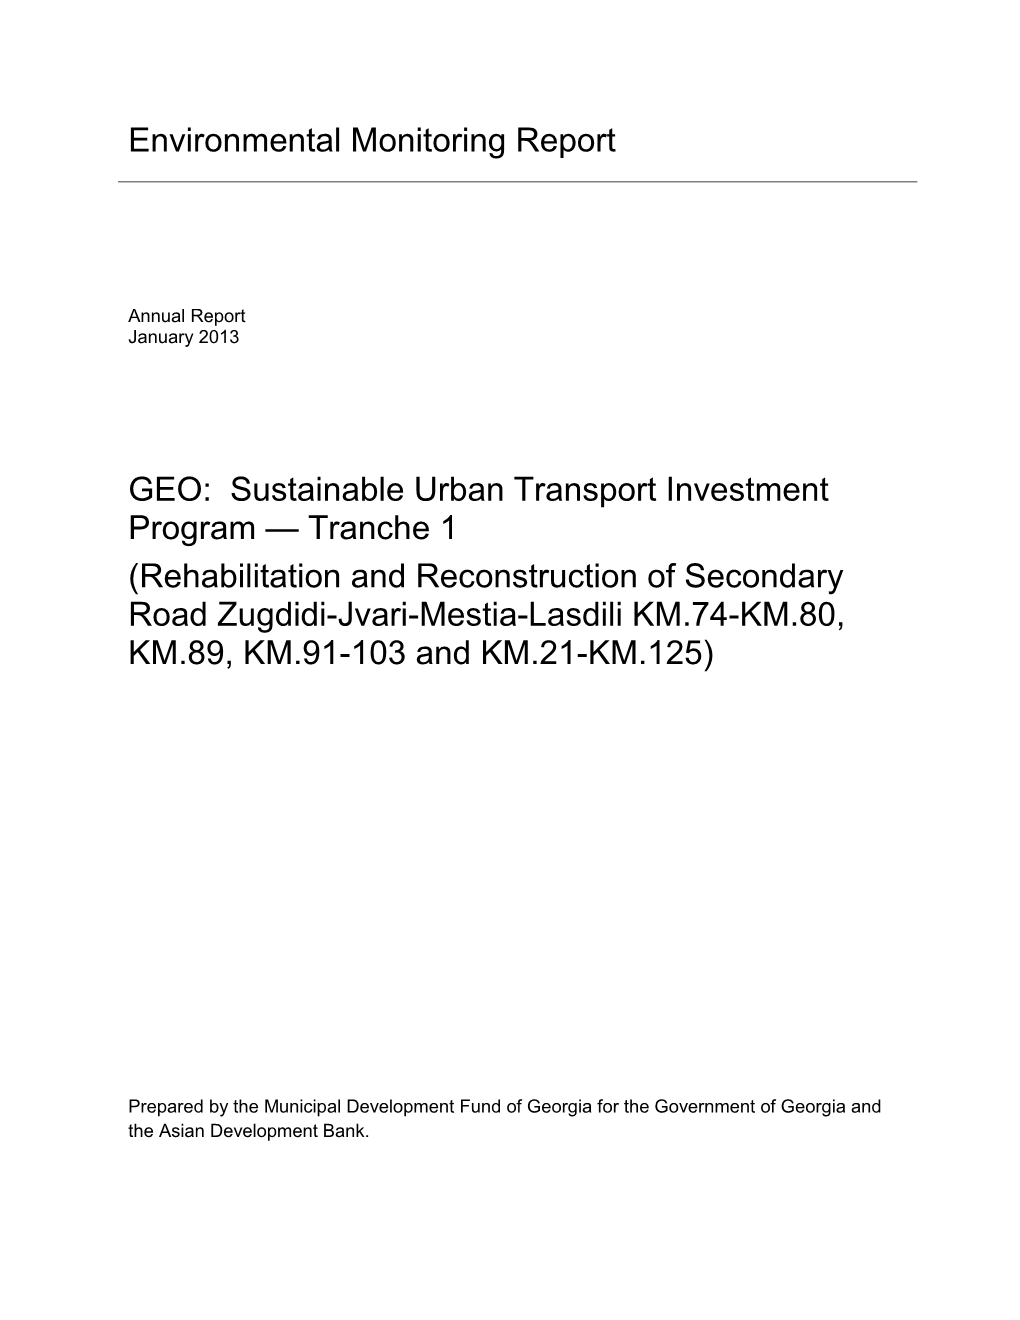 Environmental Monitoring Report GEO